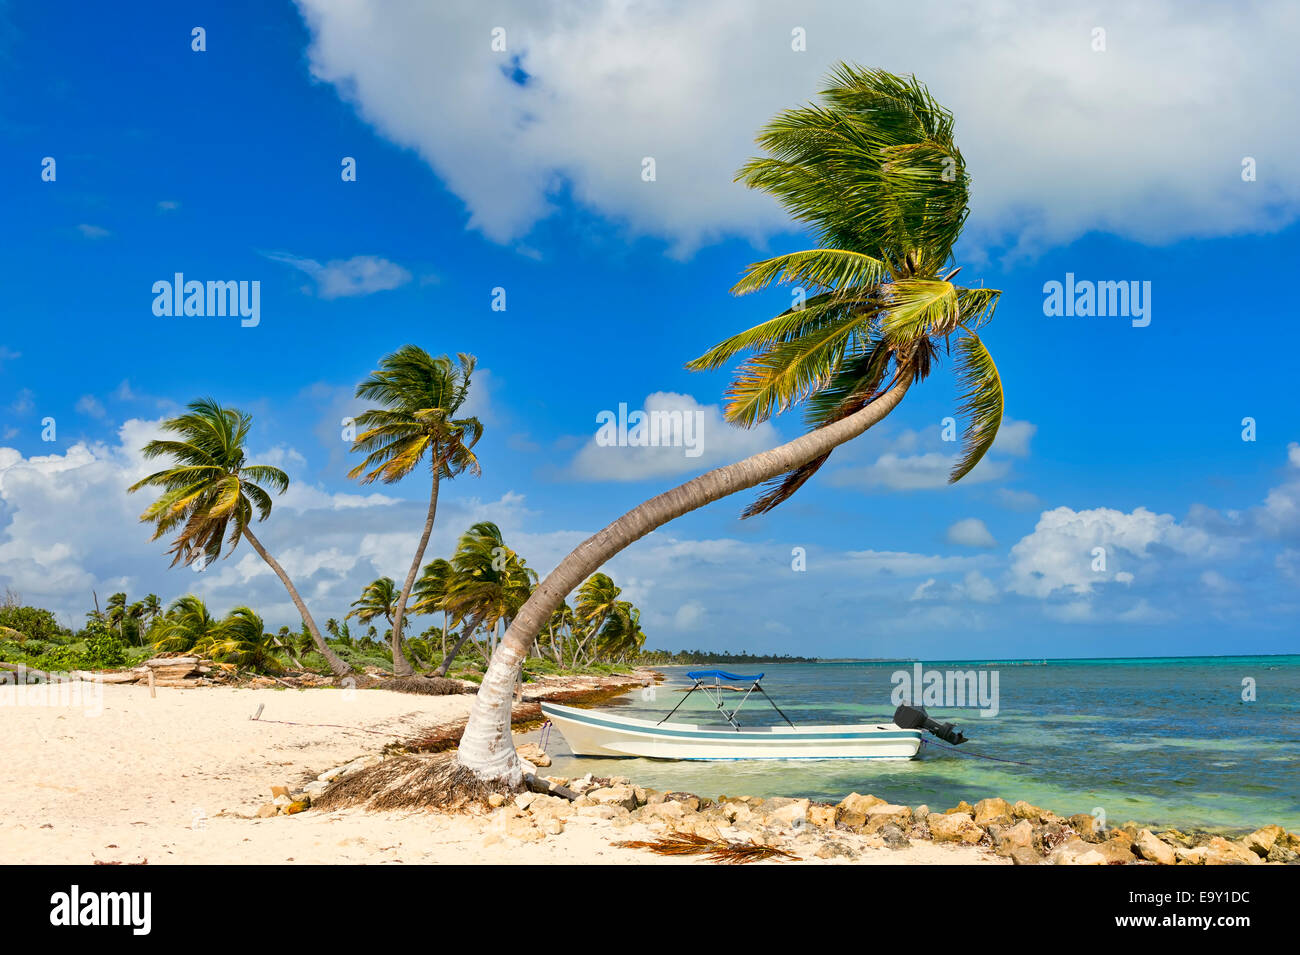 Palmen und ein Boot am Strand, Costa Maya, Quintana Roo, Mexiko Stockfoto